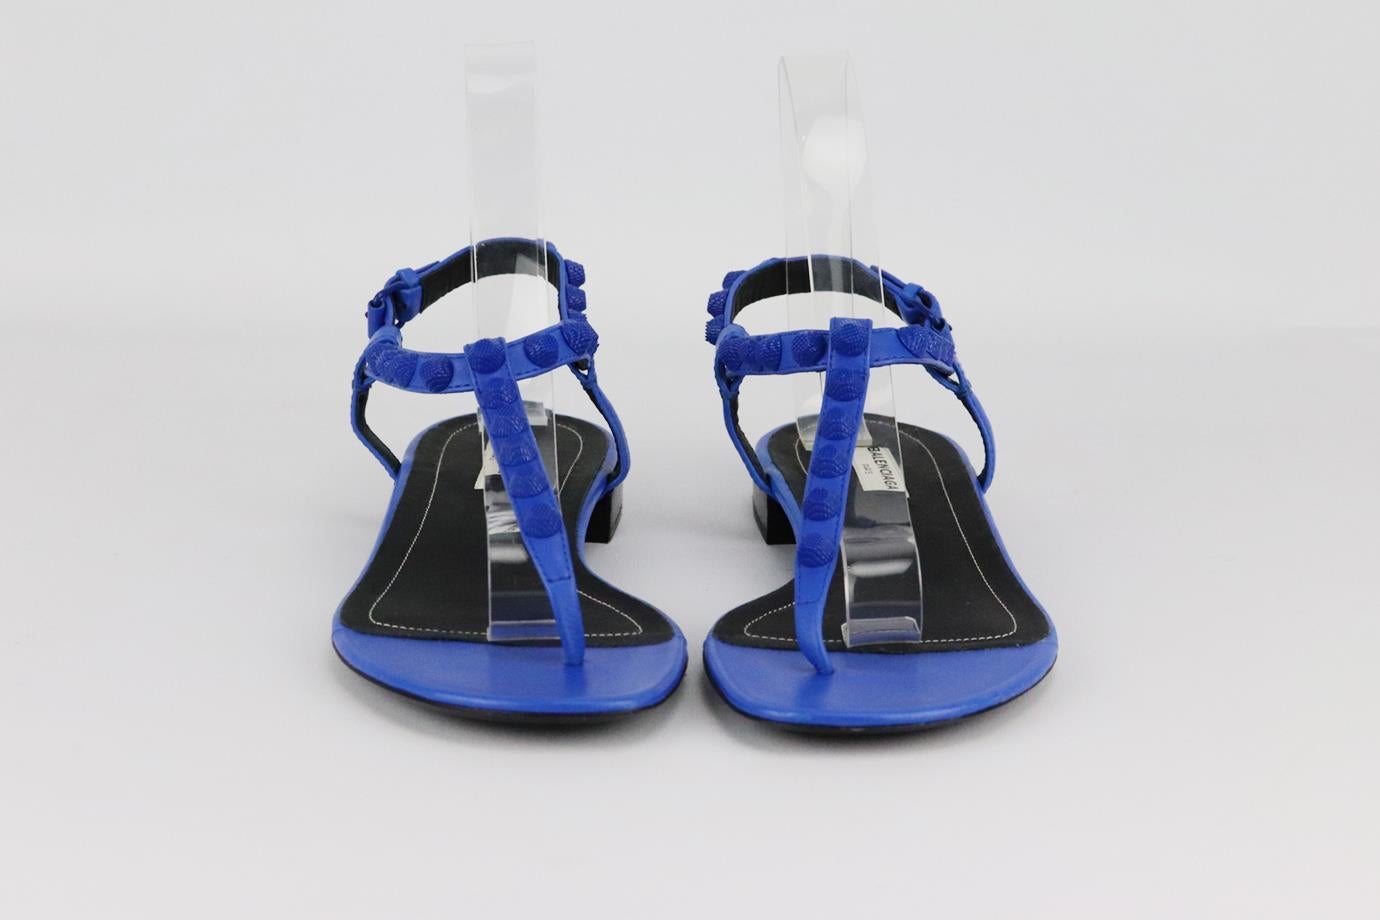 balenciaga studded flat sandals